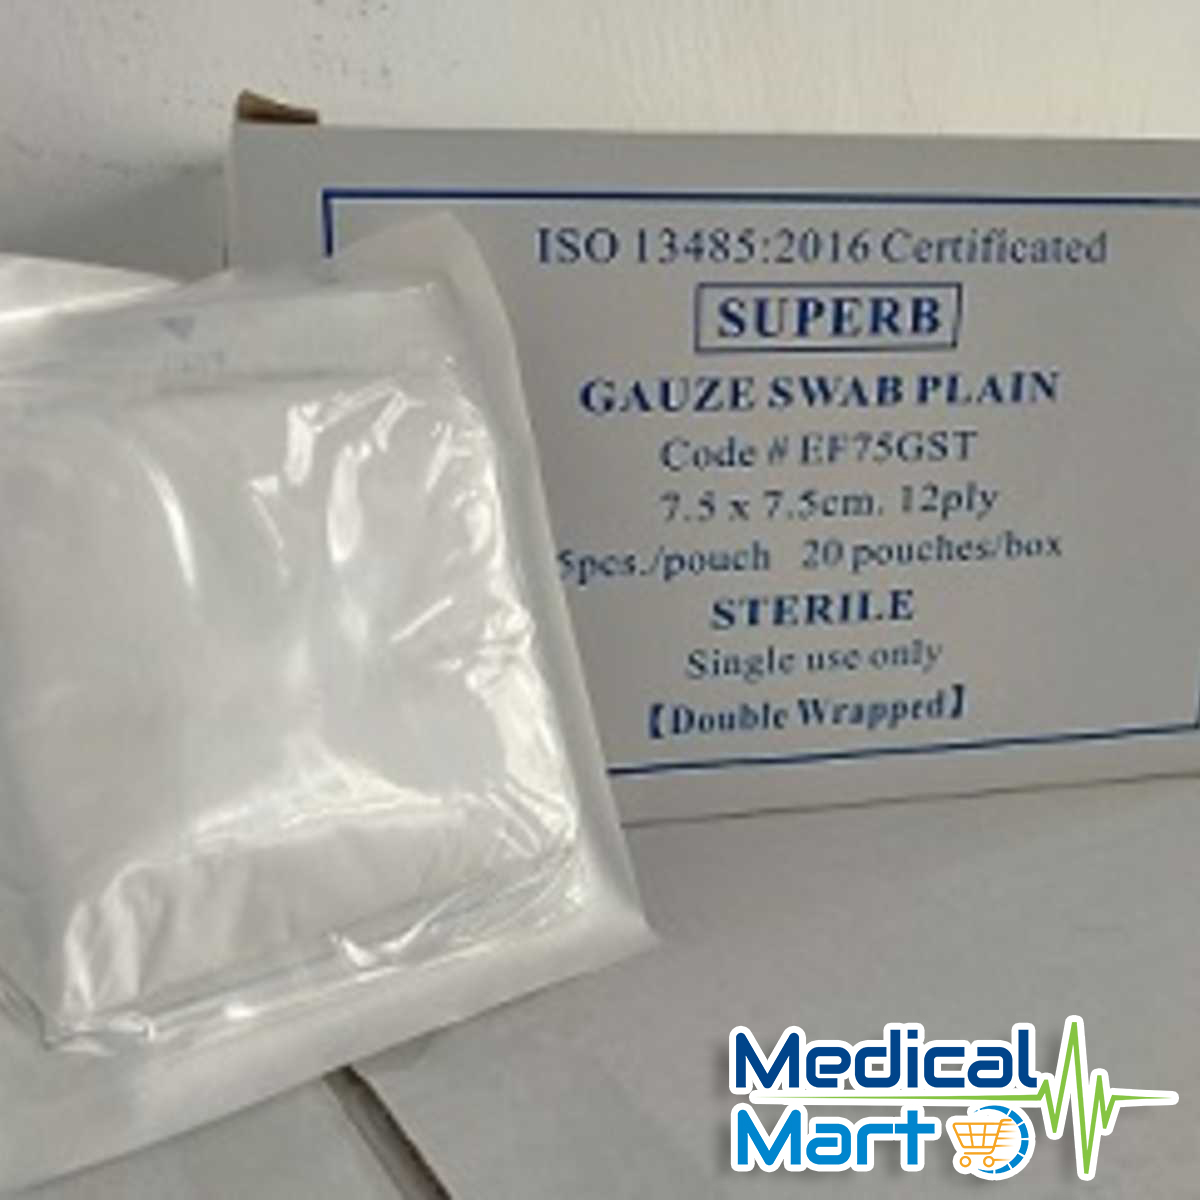 Sterile Gauze Swab Plain, 7.5cm x 7.5cm - 12ply